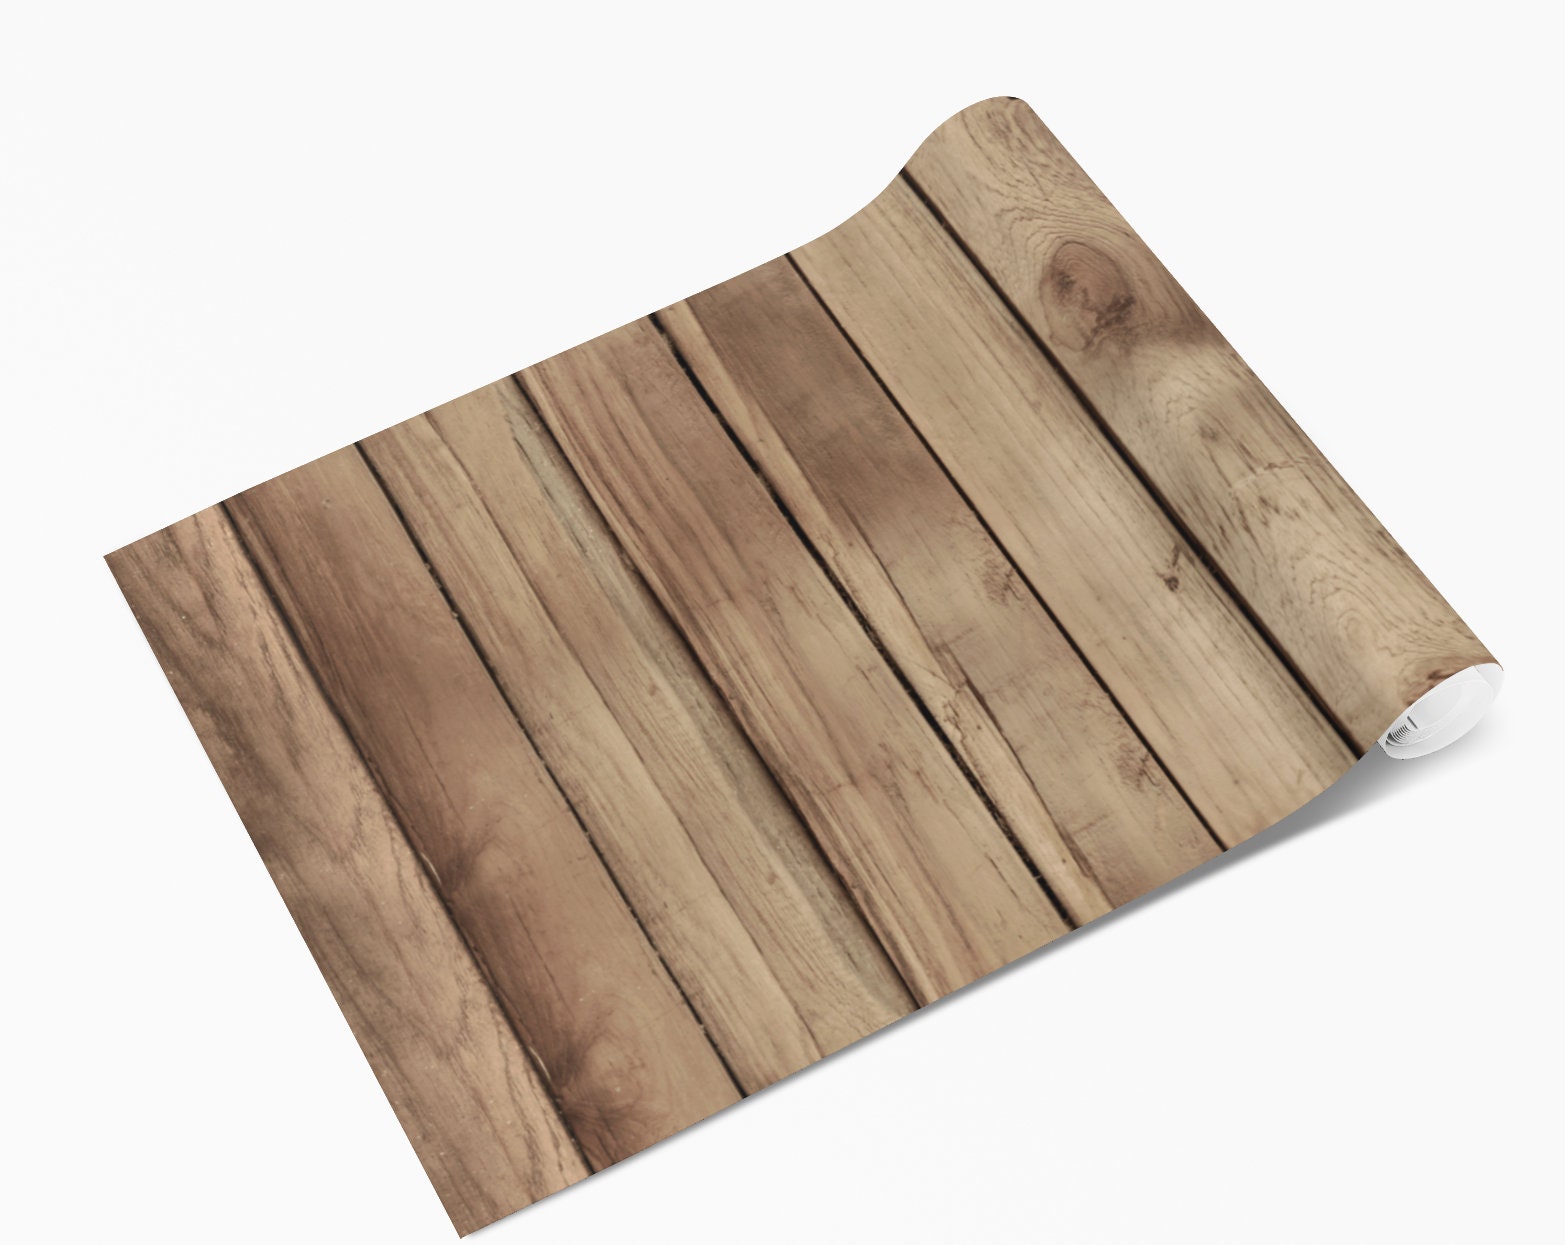 Clean Oak Wood Pattern Vinyl Furniture Wrap